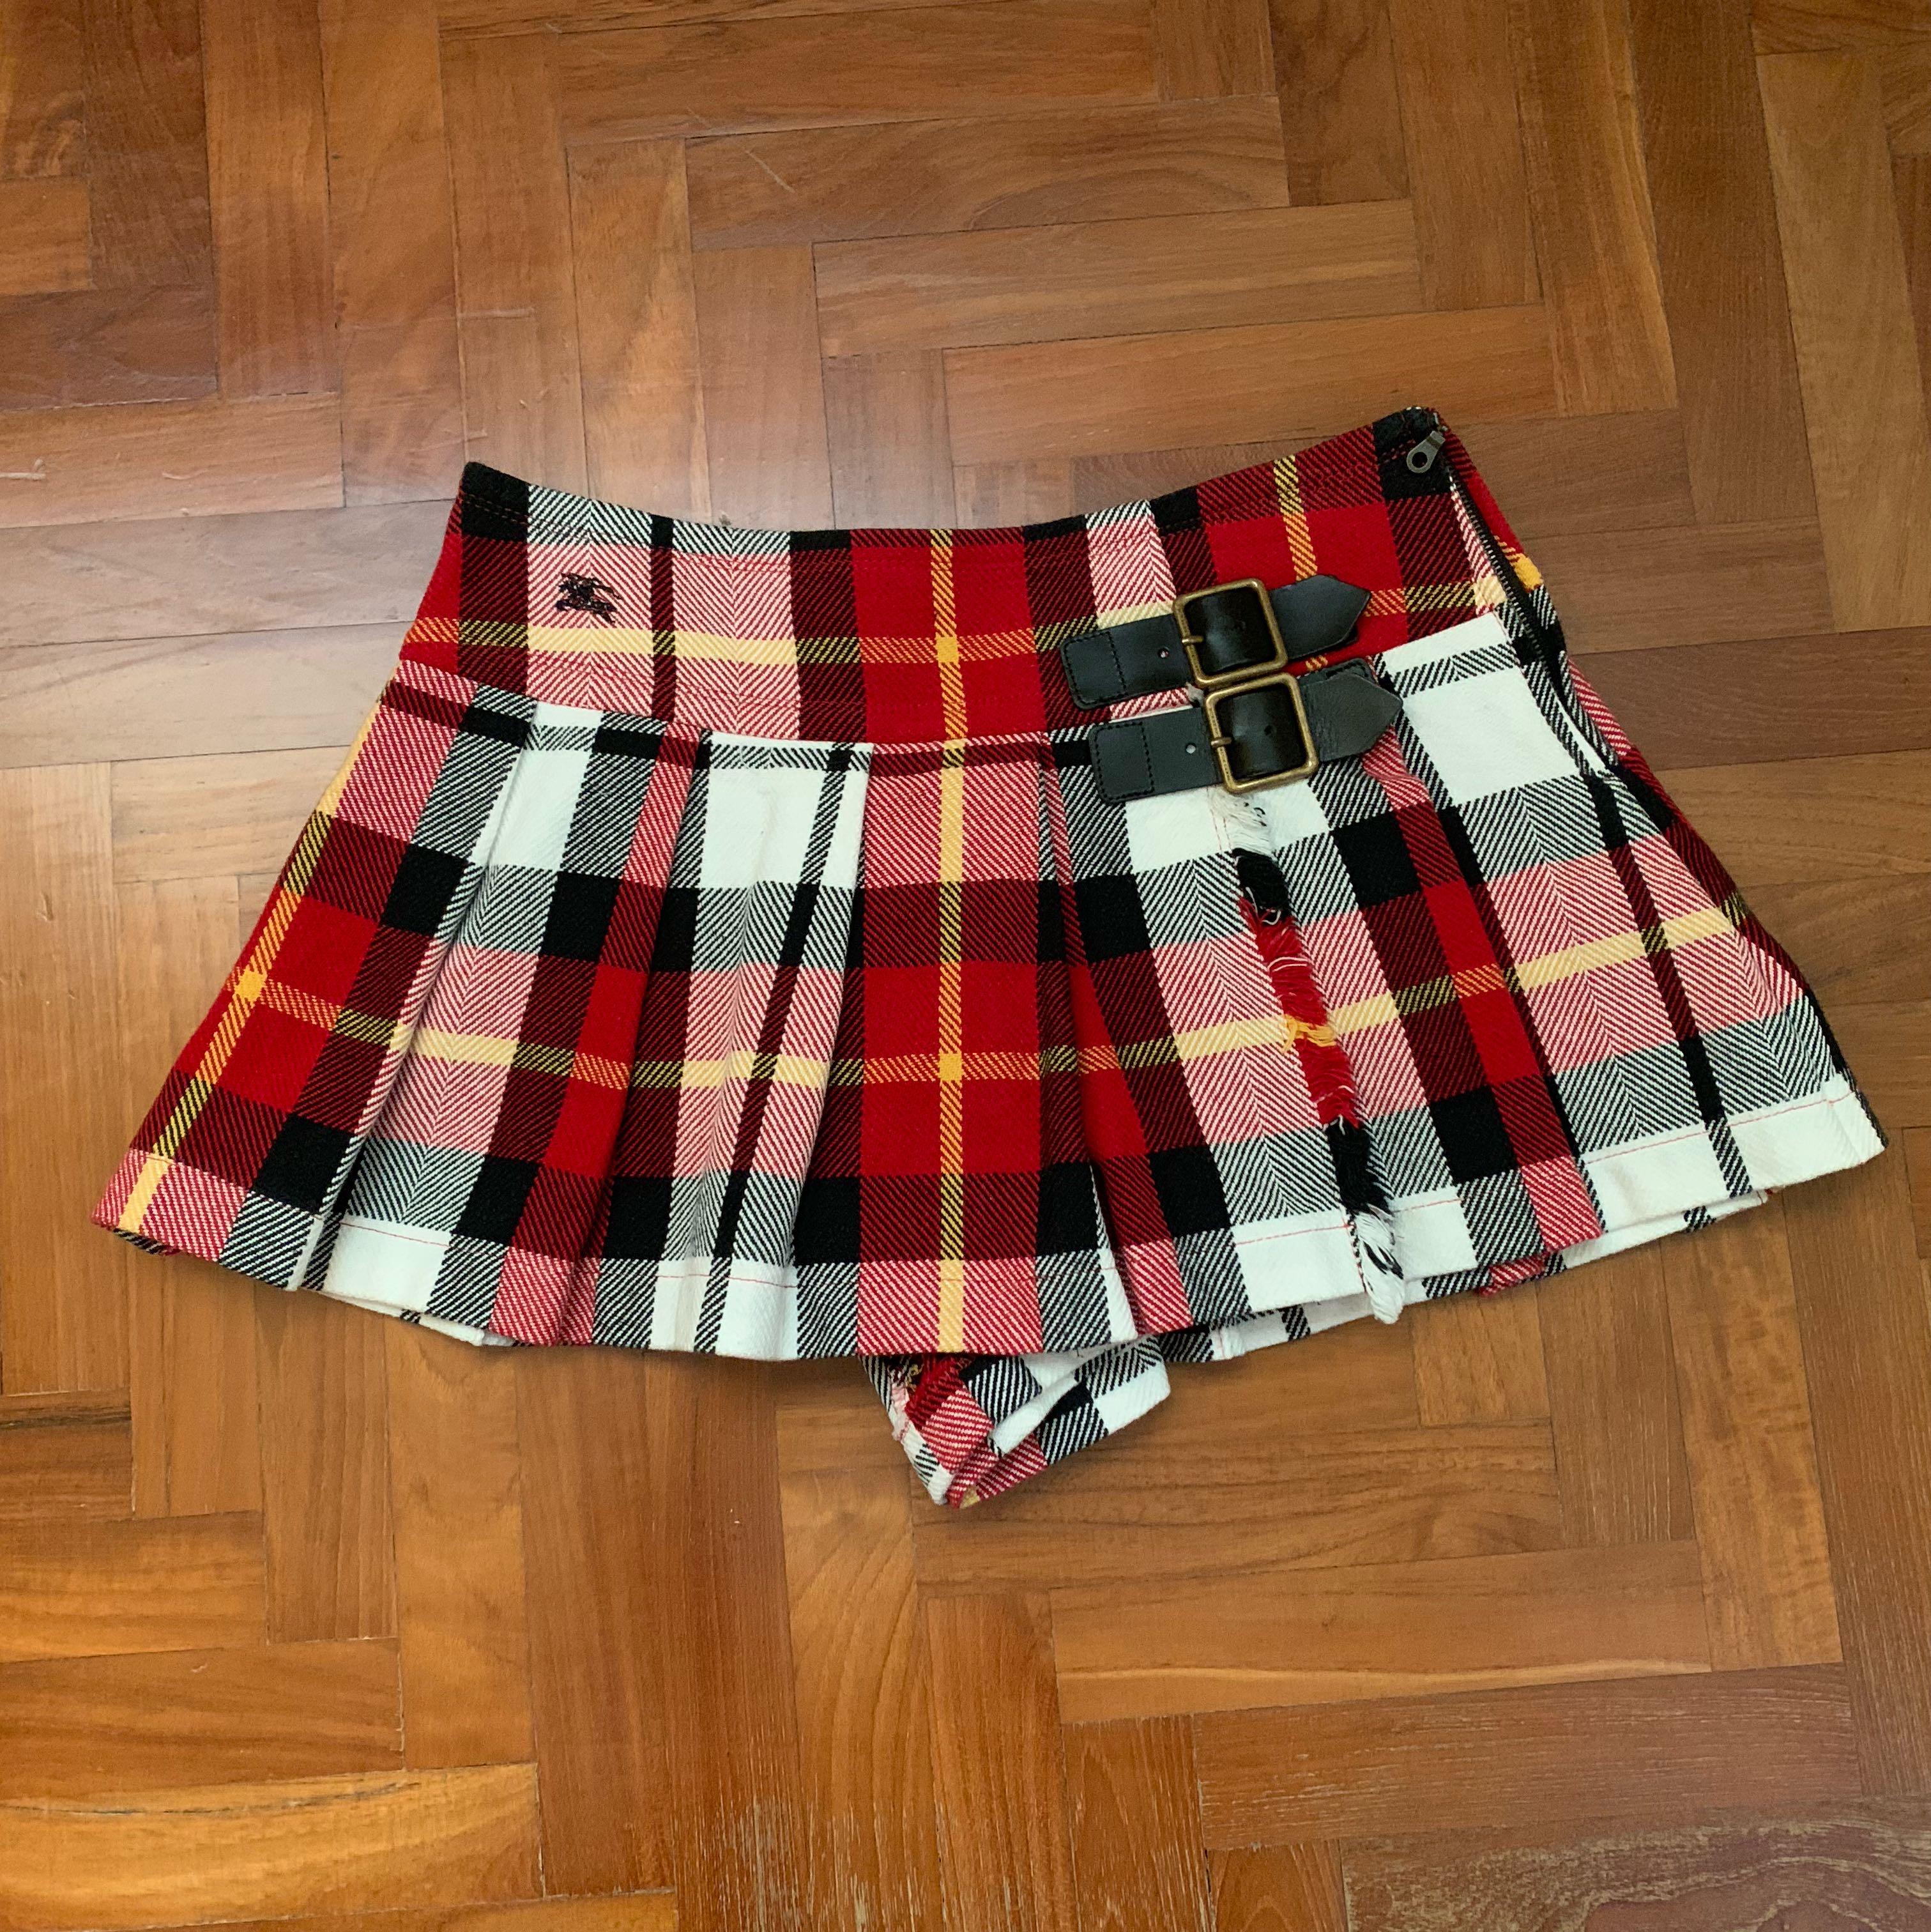 burberry skirt plaid